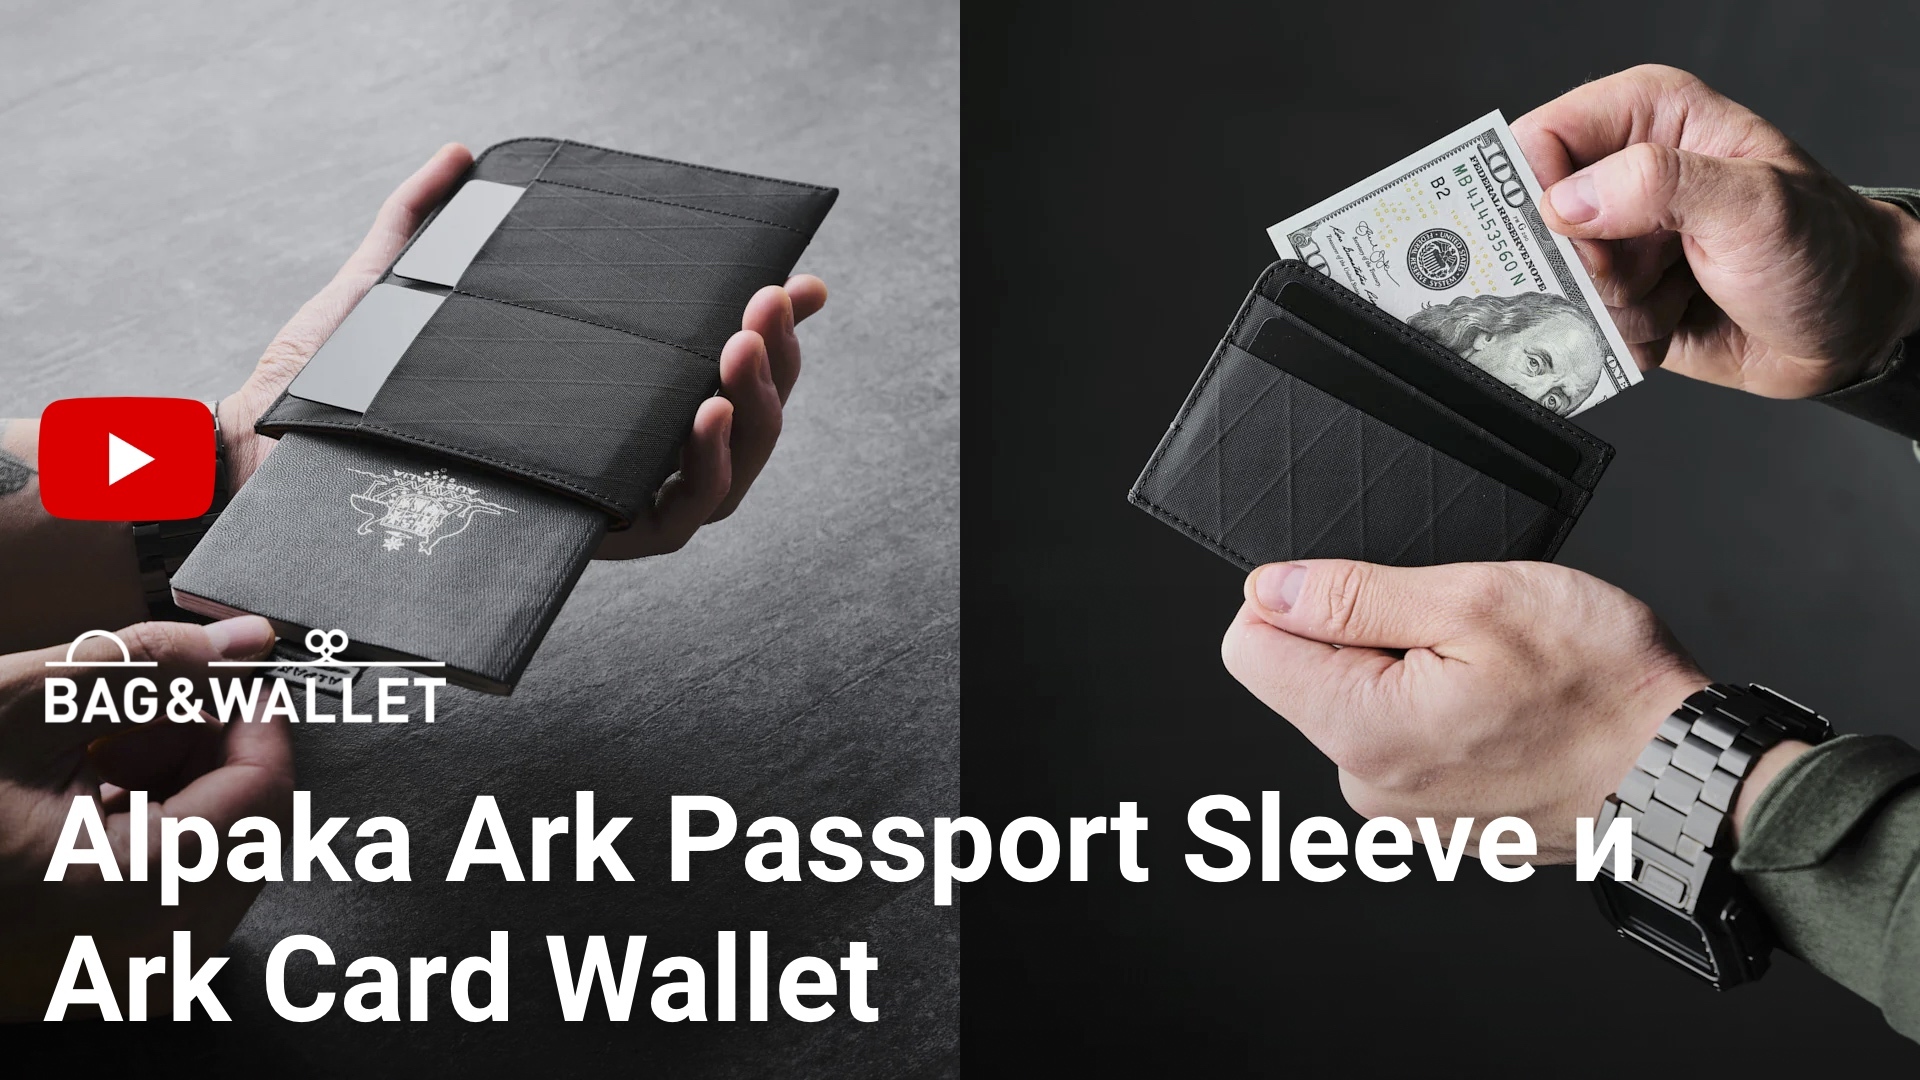 Ark Card Wallet